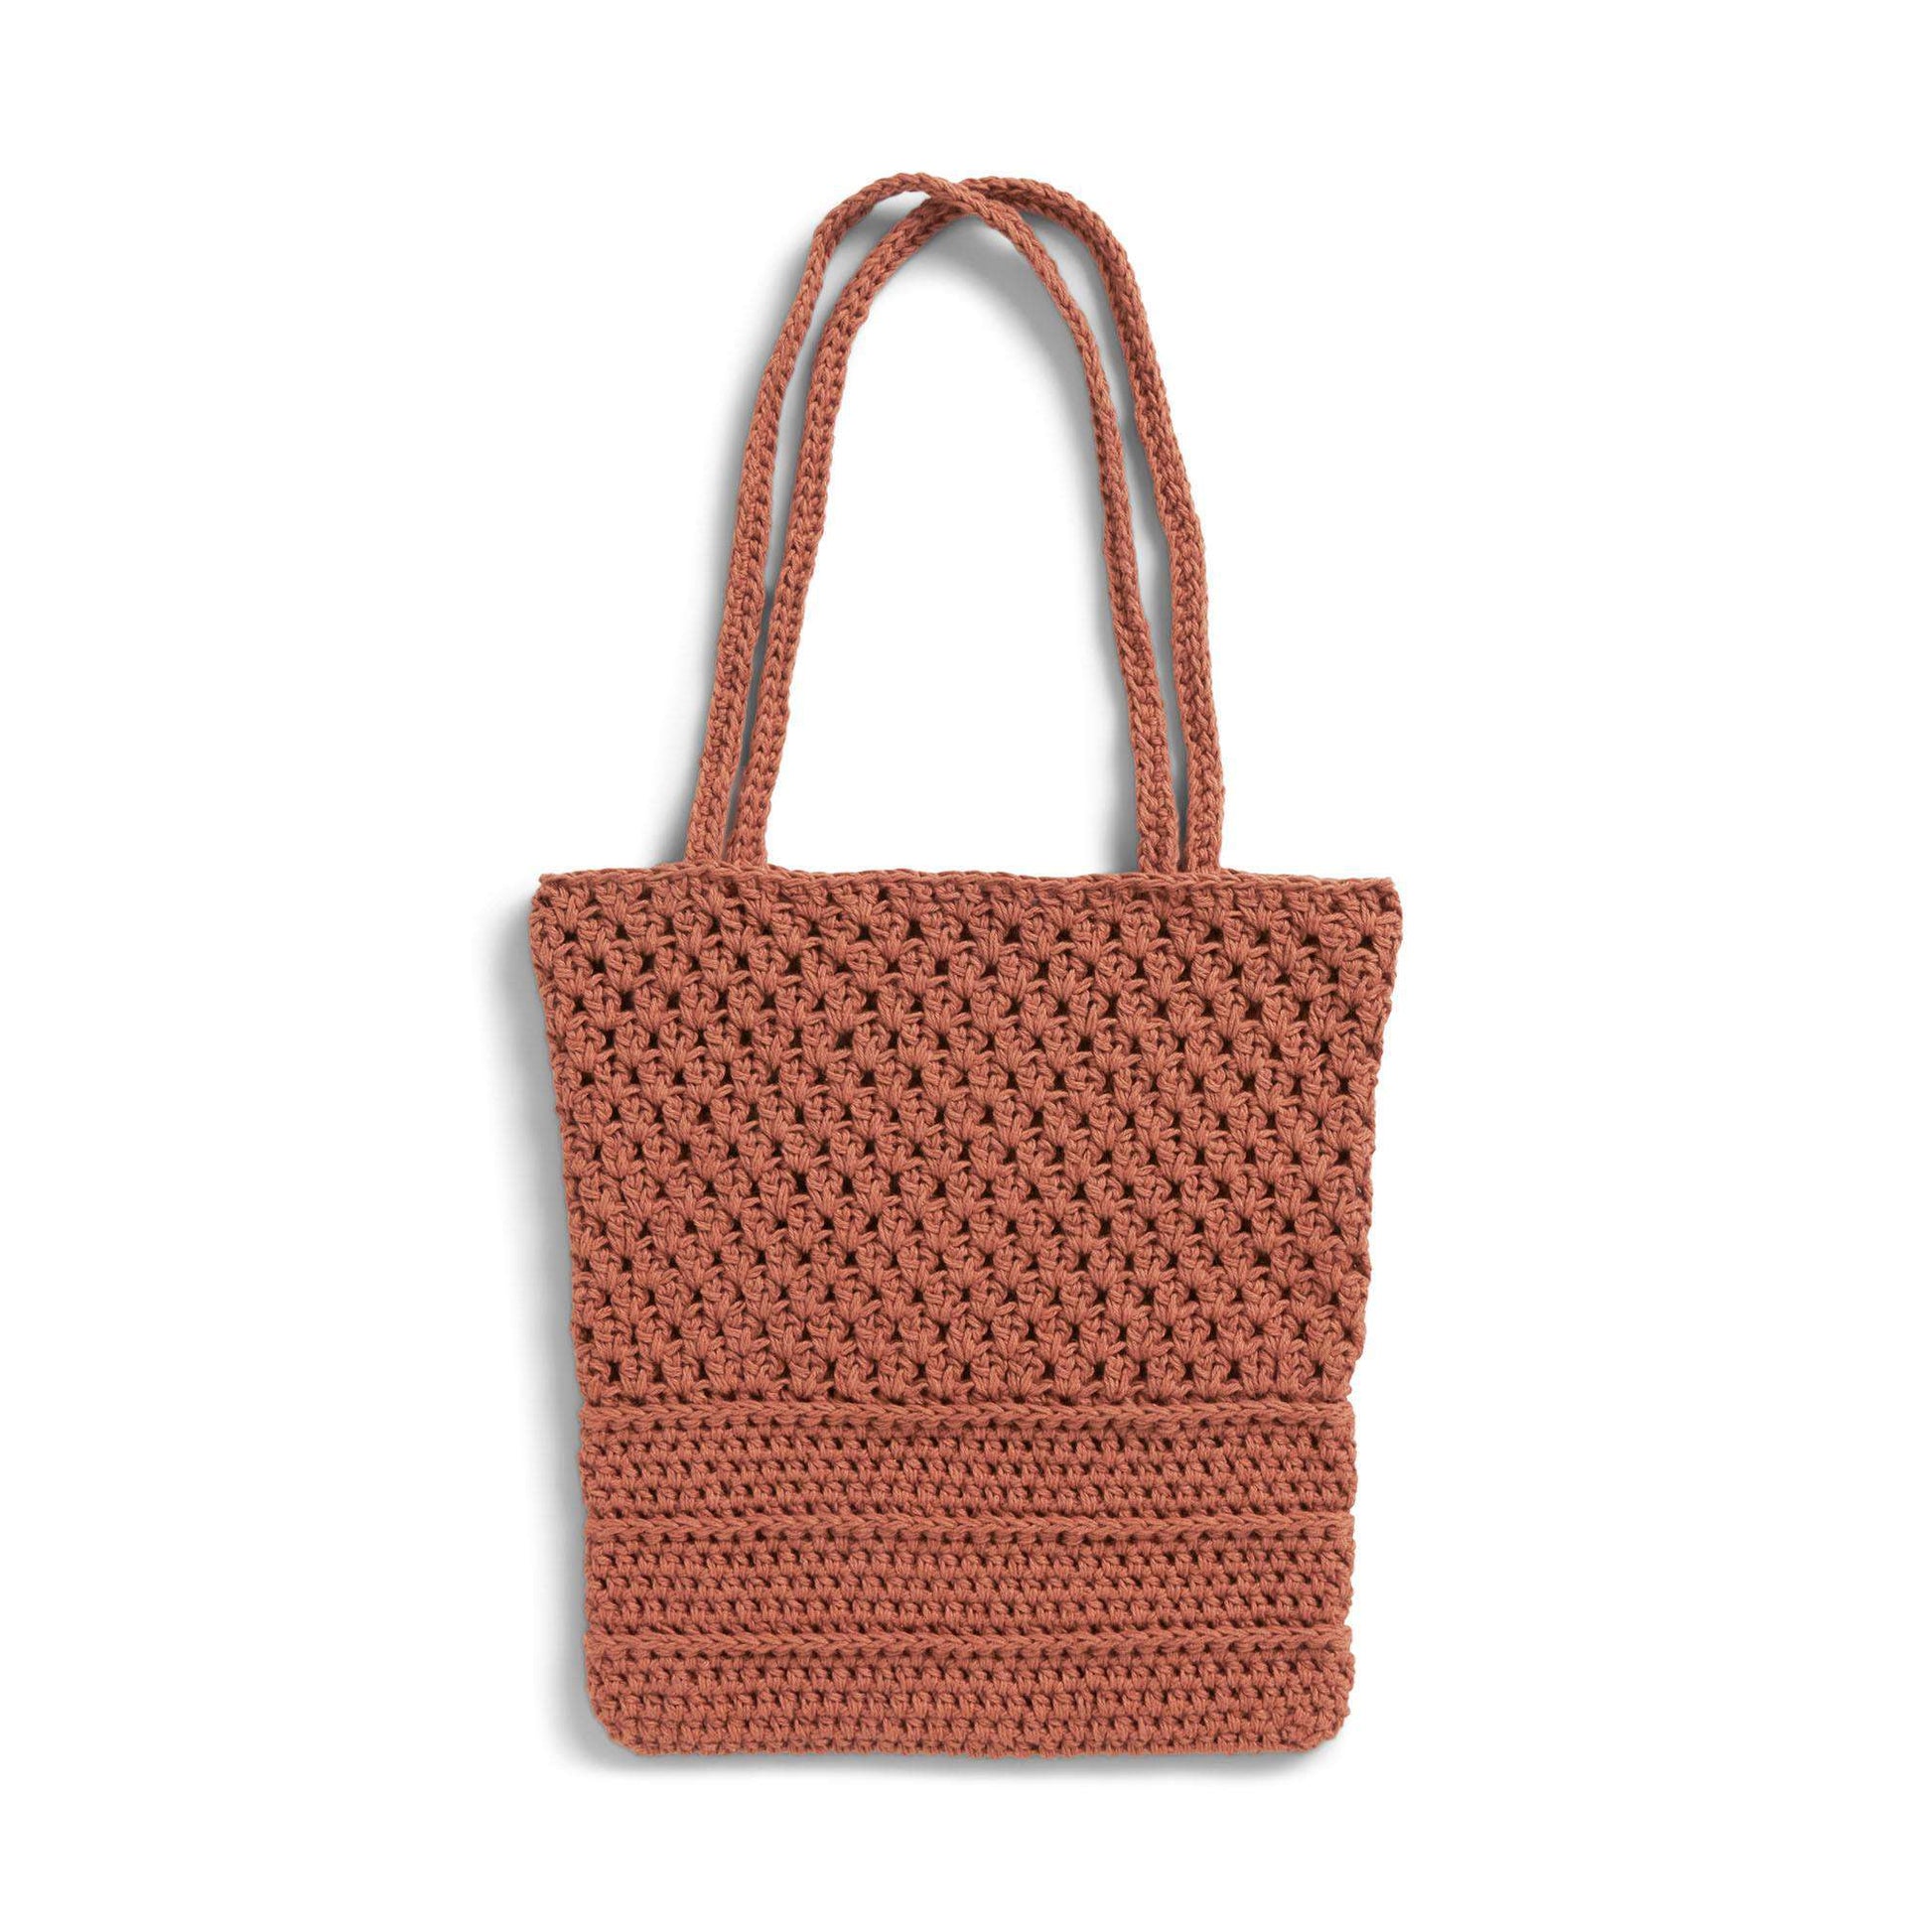 Free Patons Ridged Crochet Tote Bag Pattern